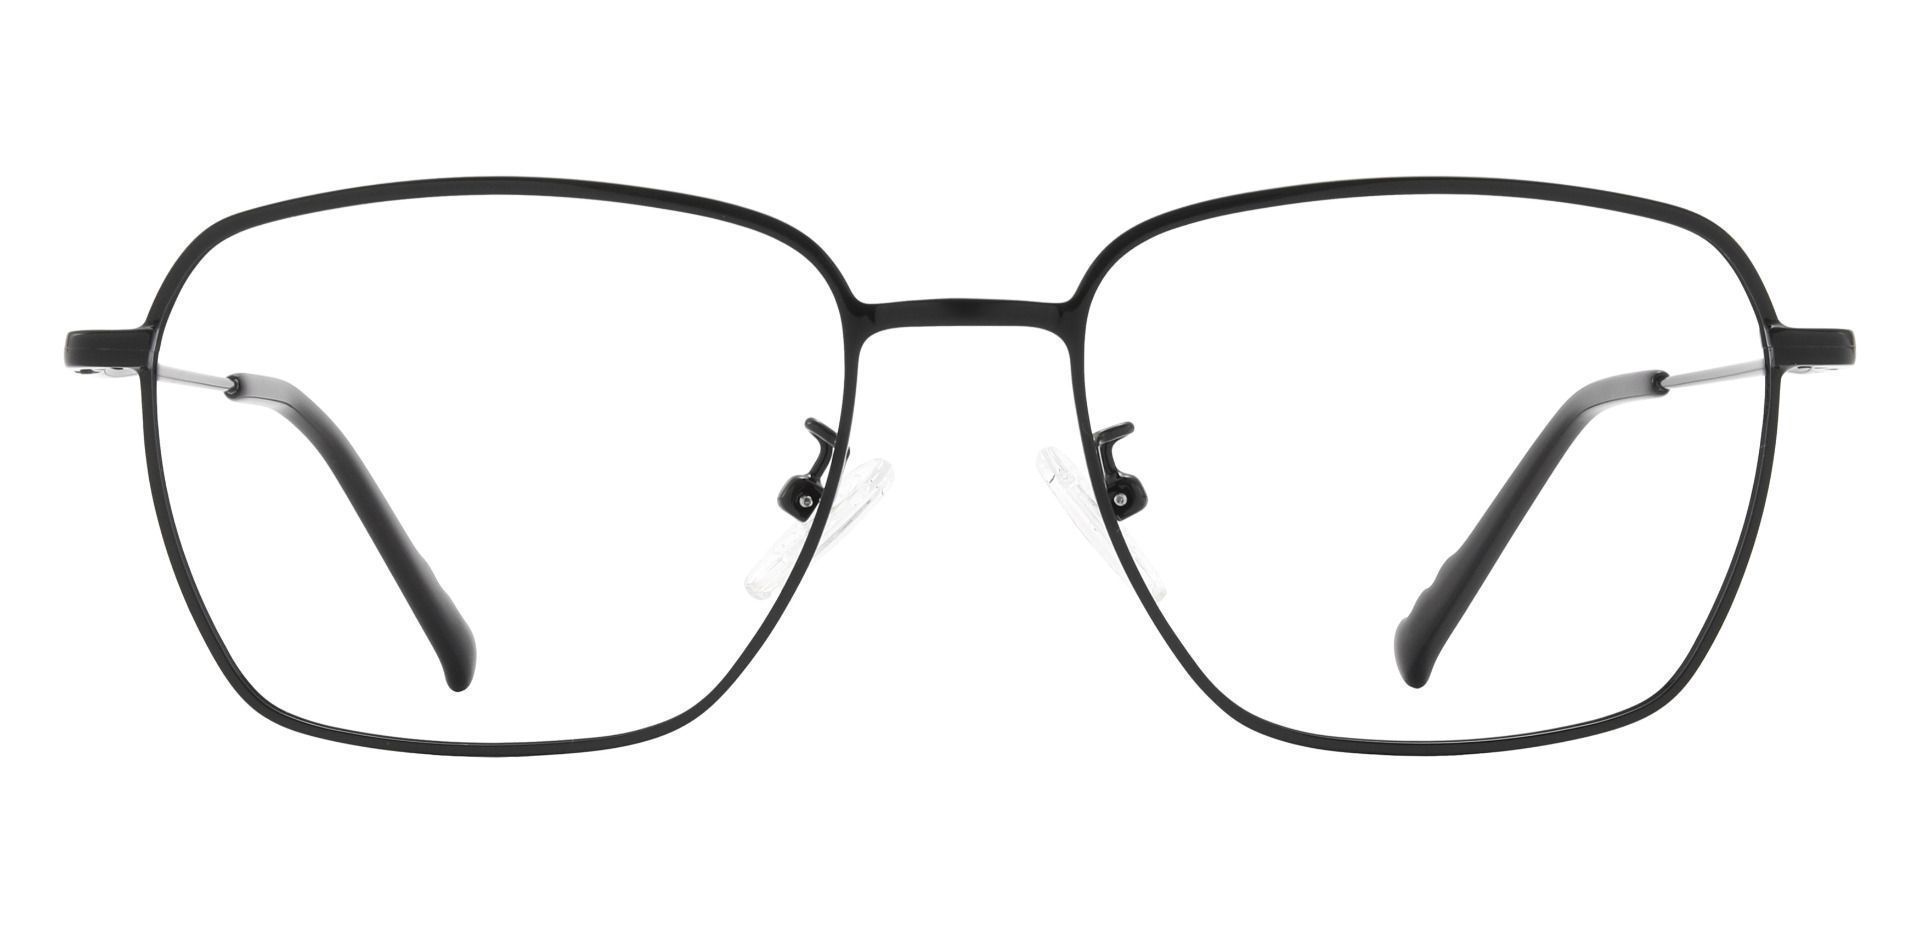 Emilio Geometric Prescription Glasses - Black